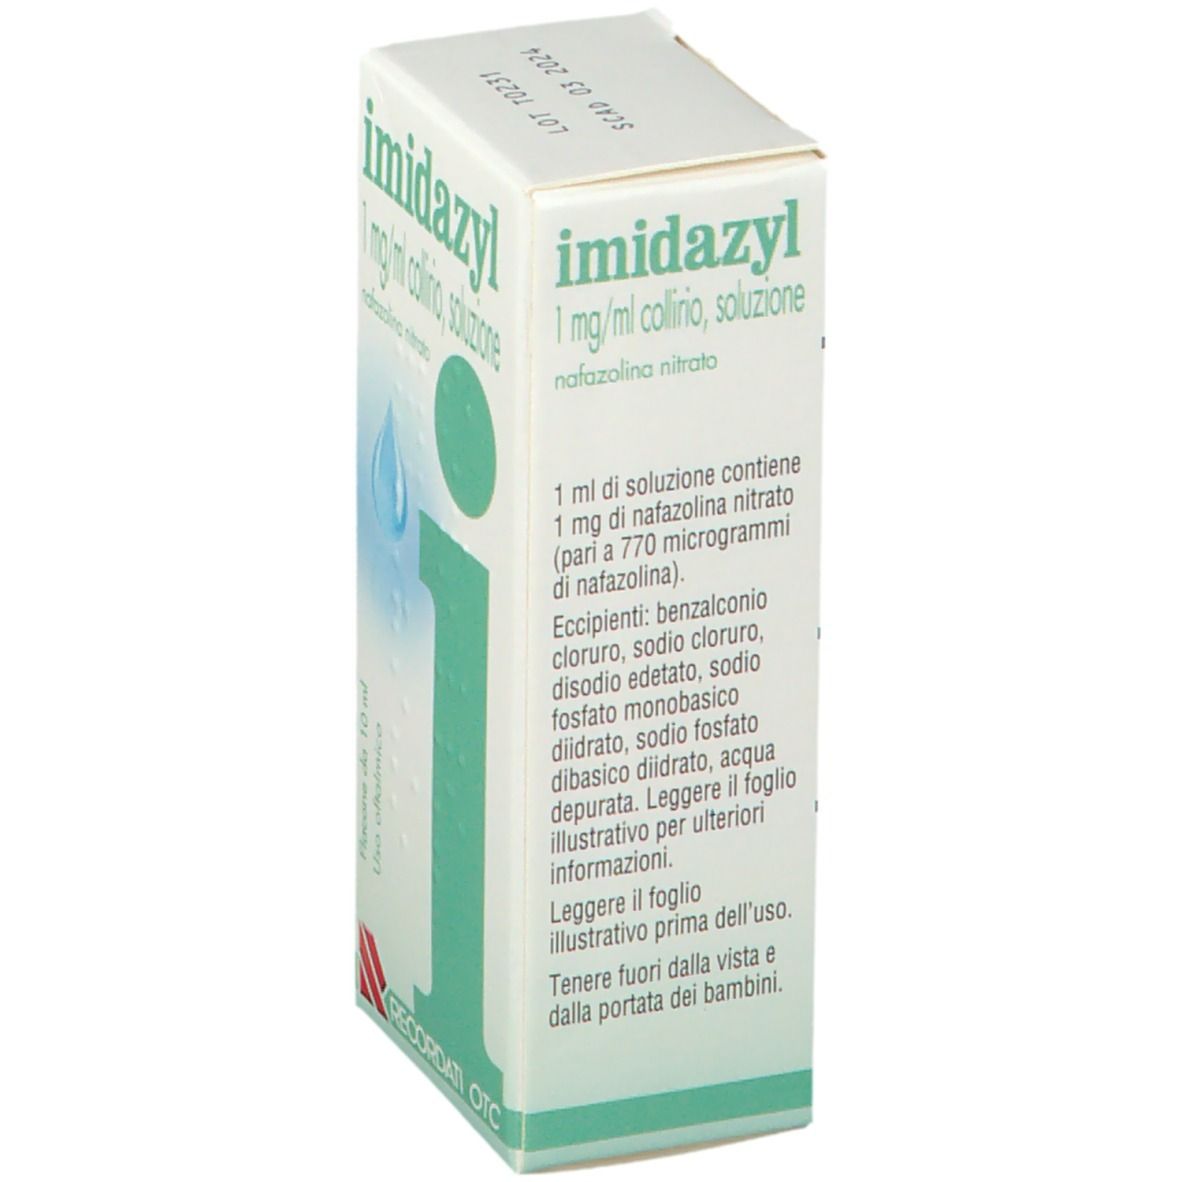 Imidazyl 1 mg/ml collirio Soluzione, Flacone